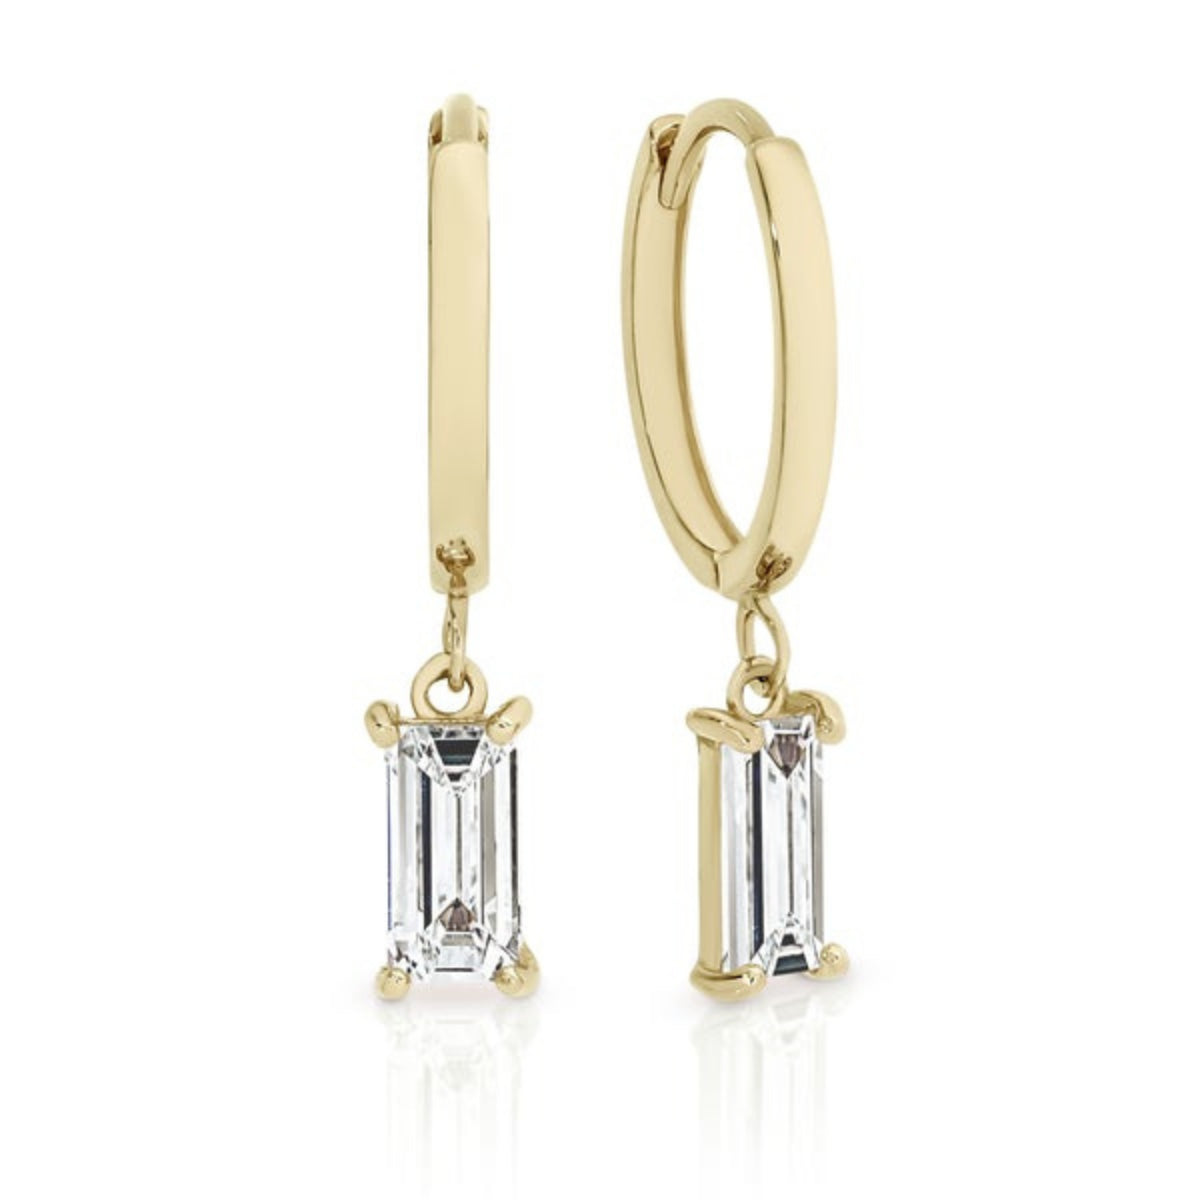 Gold Huggie Earrings with Emerald Cut Drop